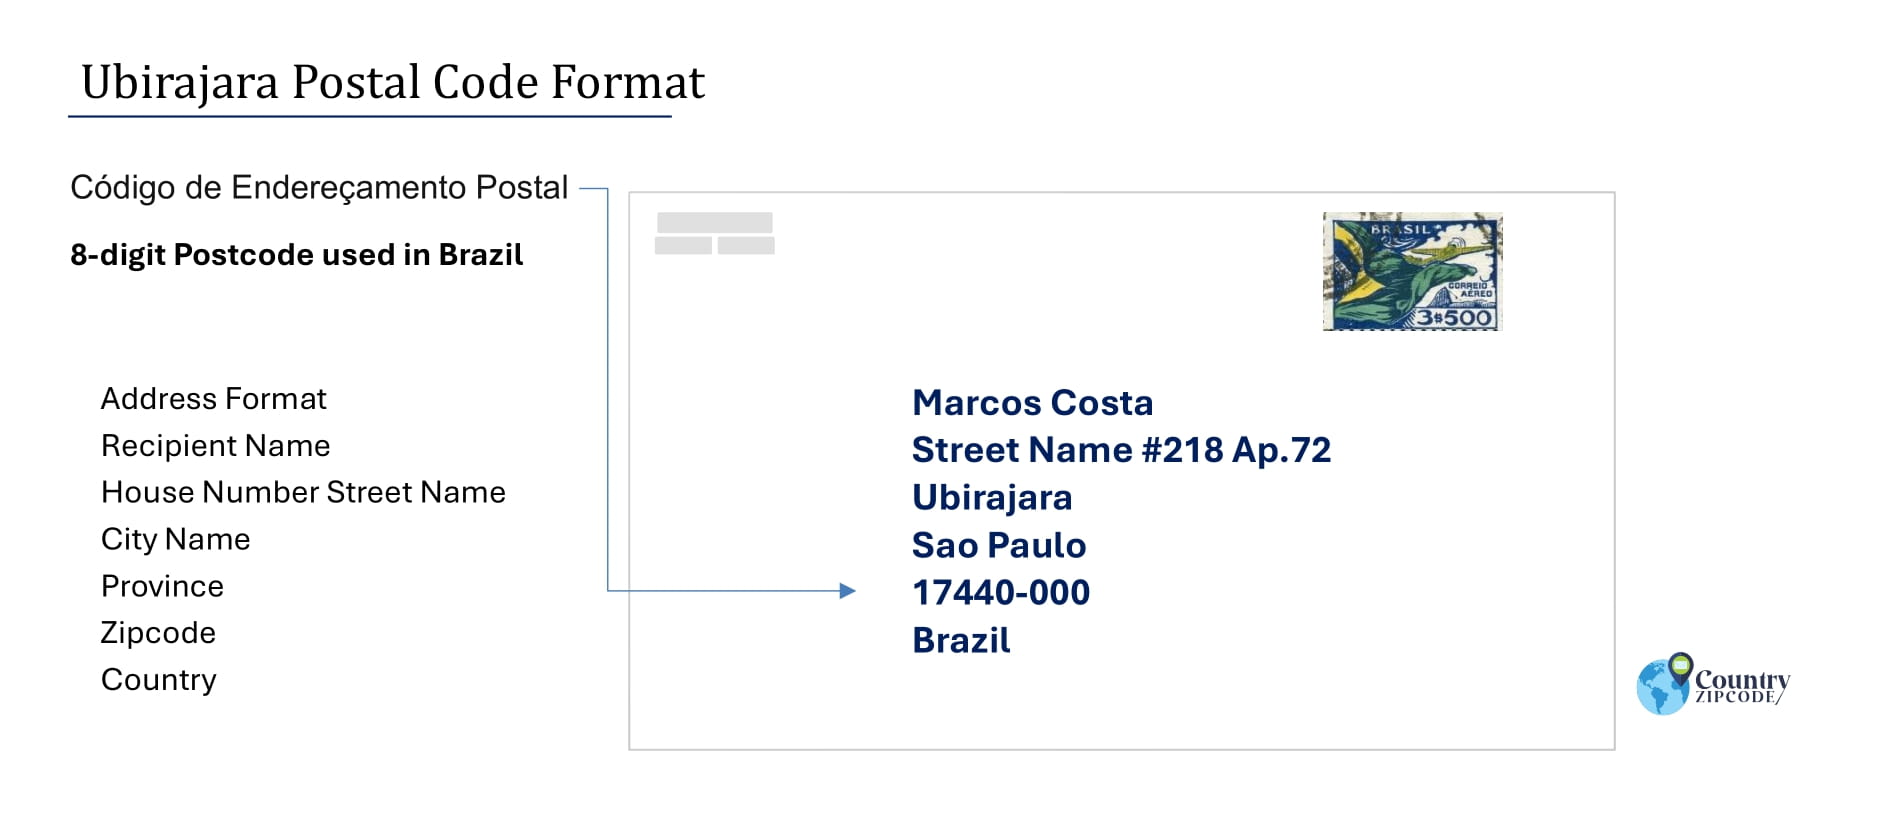 Example of Codigo de Enderecamento Postal and Address format of Ubirajara Brazil